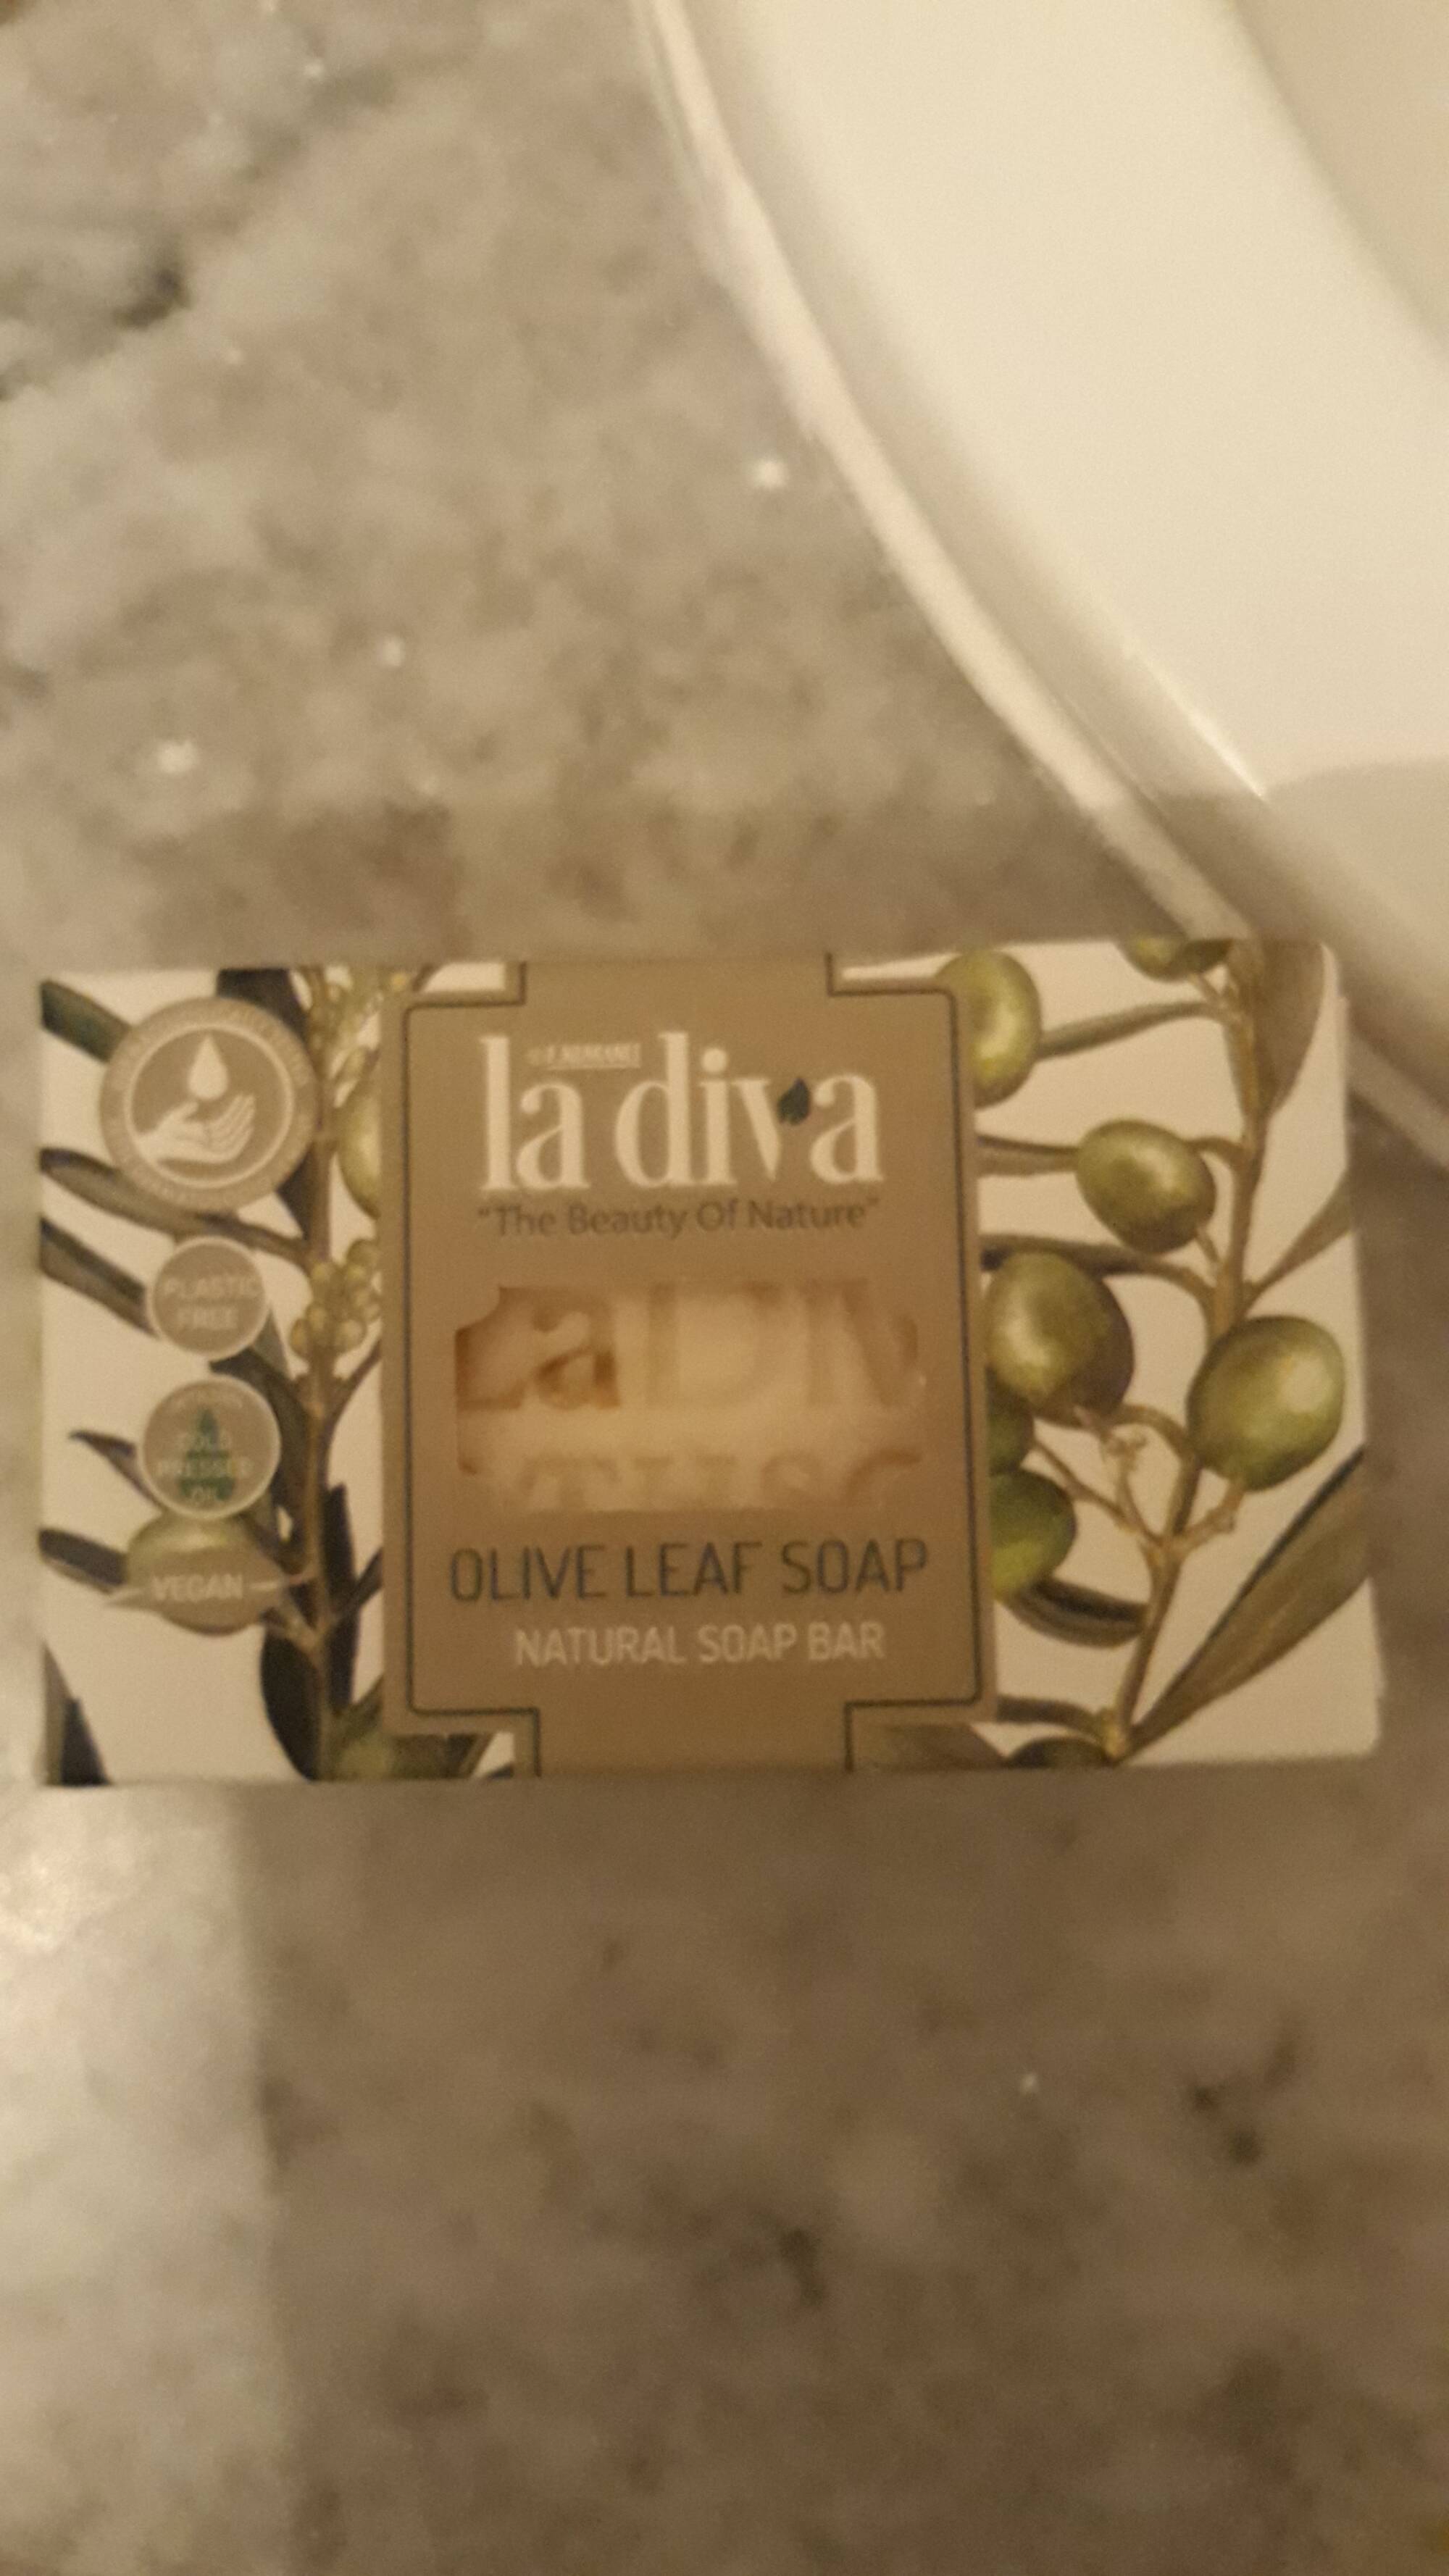 LA DIVA - Olive leaf soap